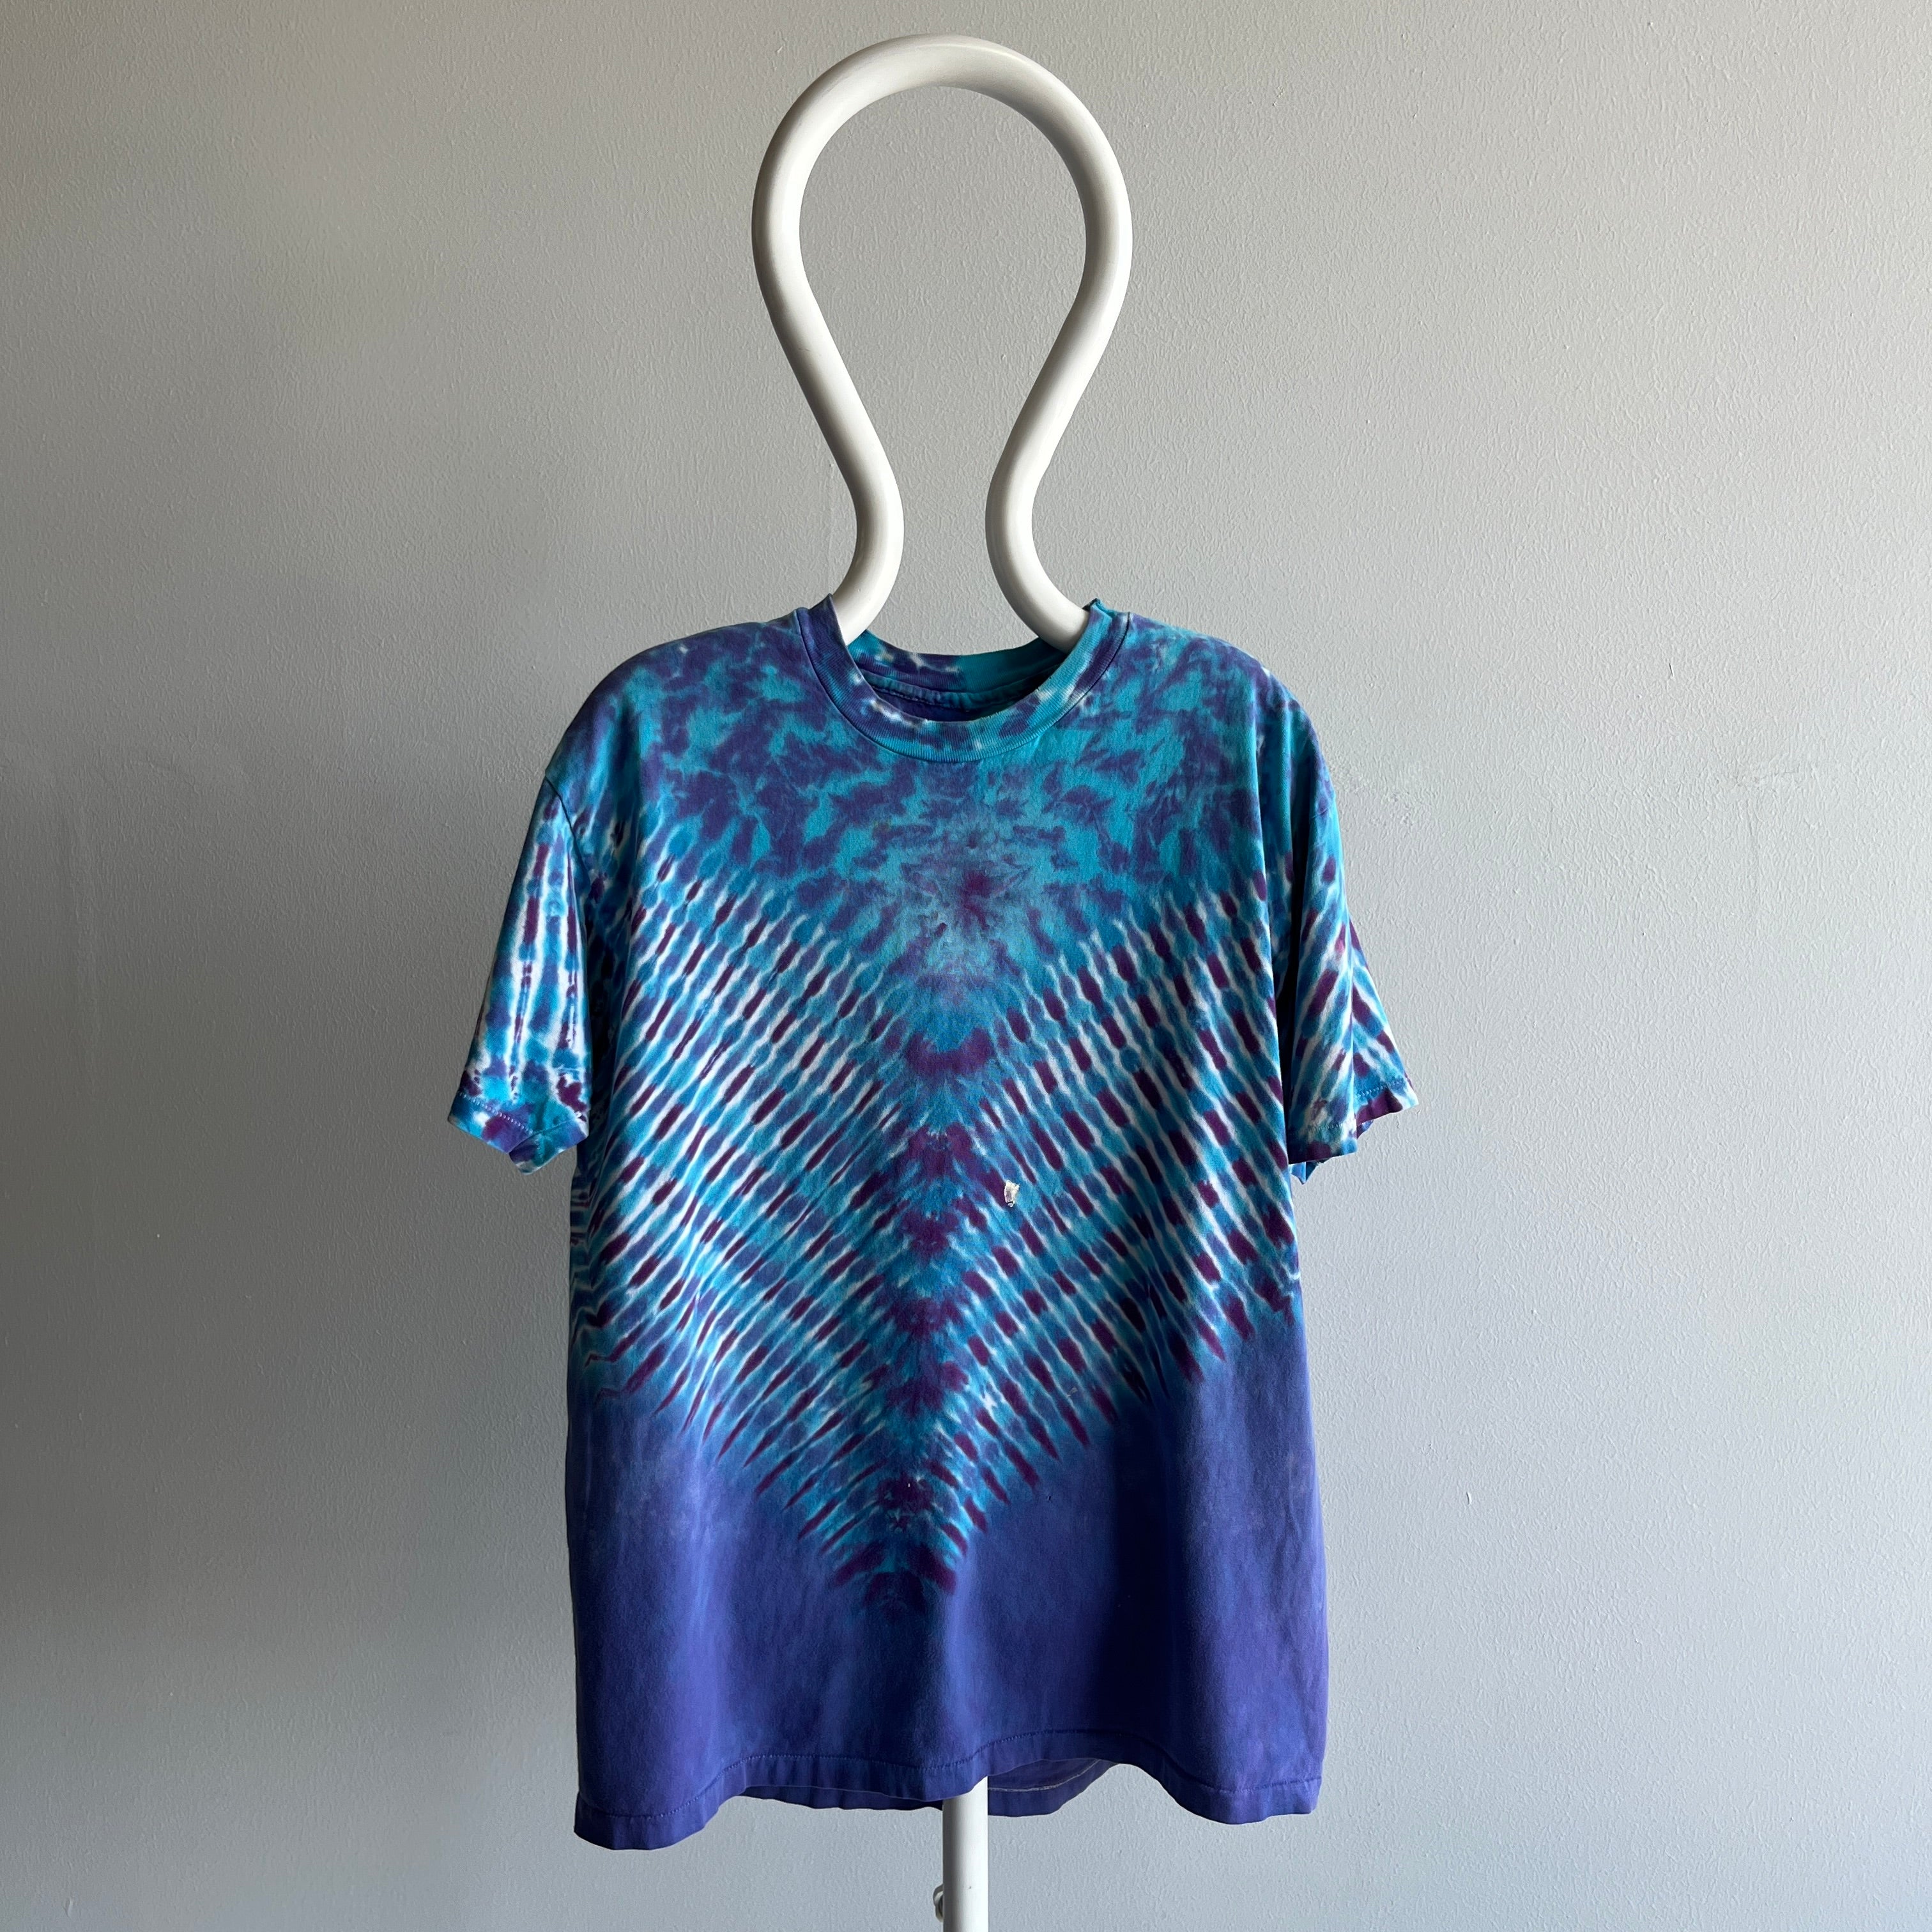 1980s Rad Worn Tie Dye T-Shirt - Cool Wear Holes